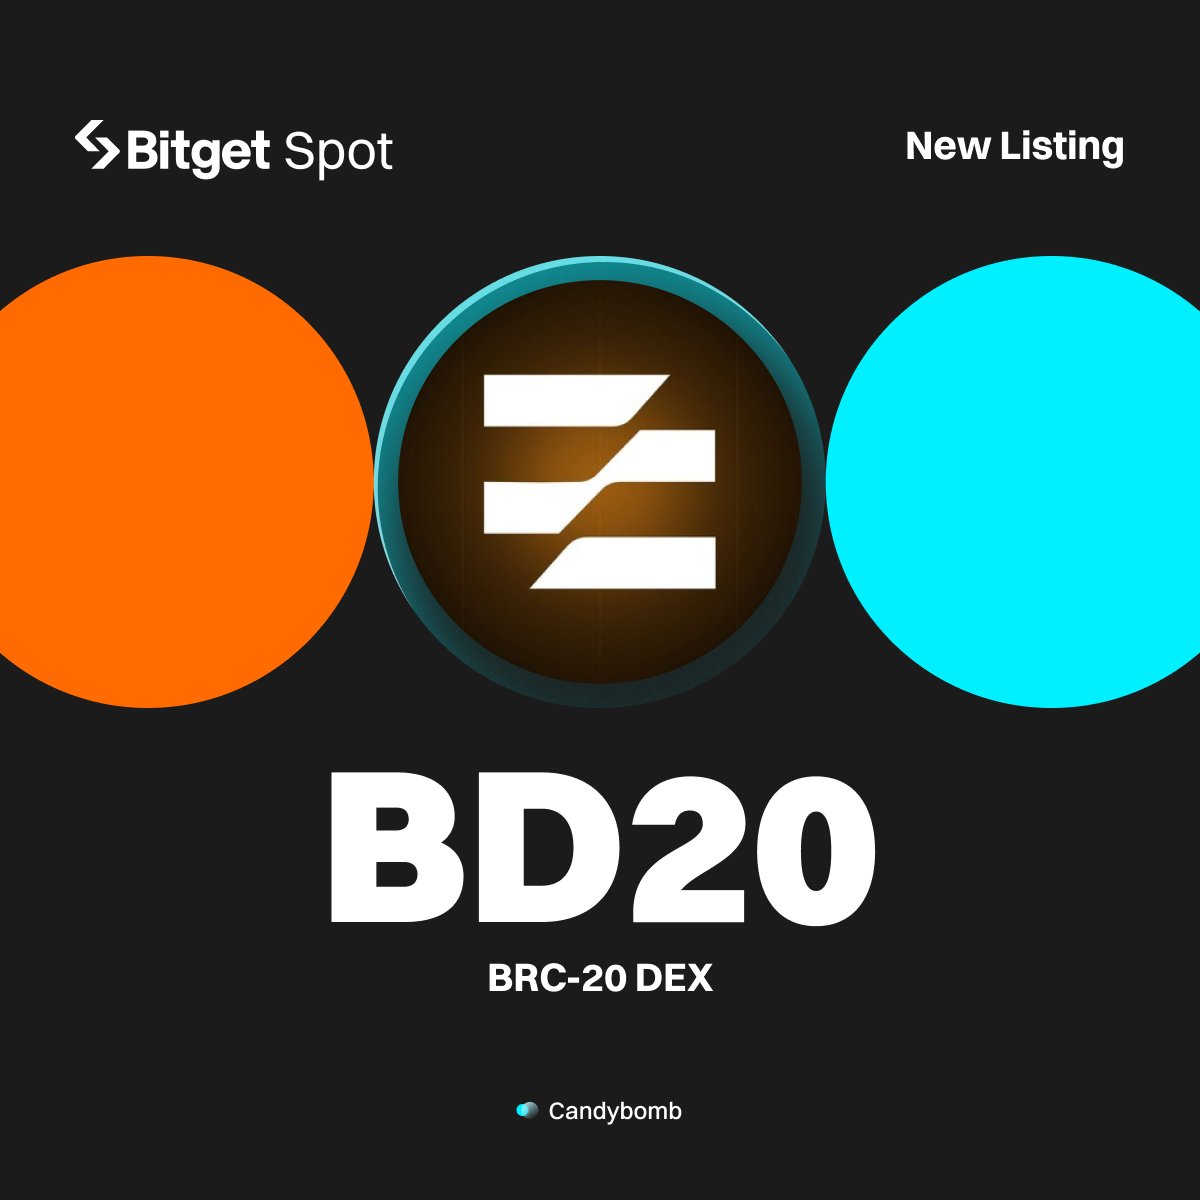 📢 New Listing - #BD20 @Brc_20dex #Bitget will list BD20/USDT in #BRC20 & #Inscription Zone 🔹Deposit: opened 🔹Trading starts: April 23, 13:00 (UTC) More details: bitget.com/en/support/art…